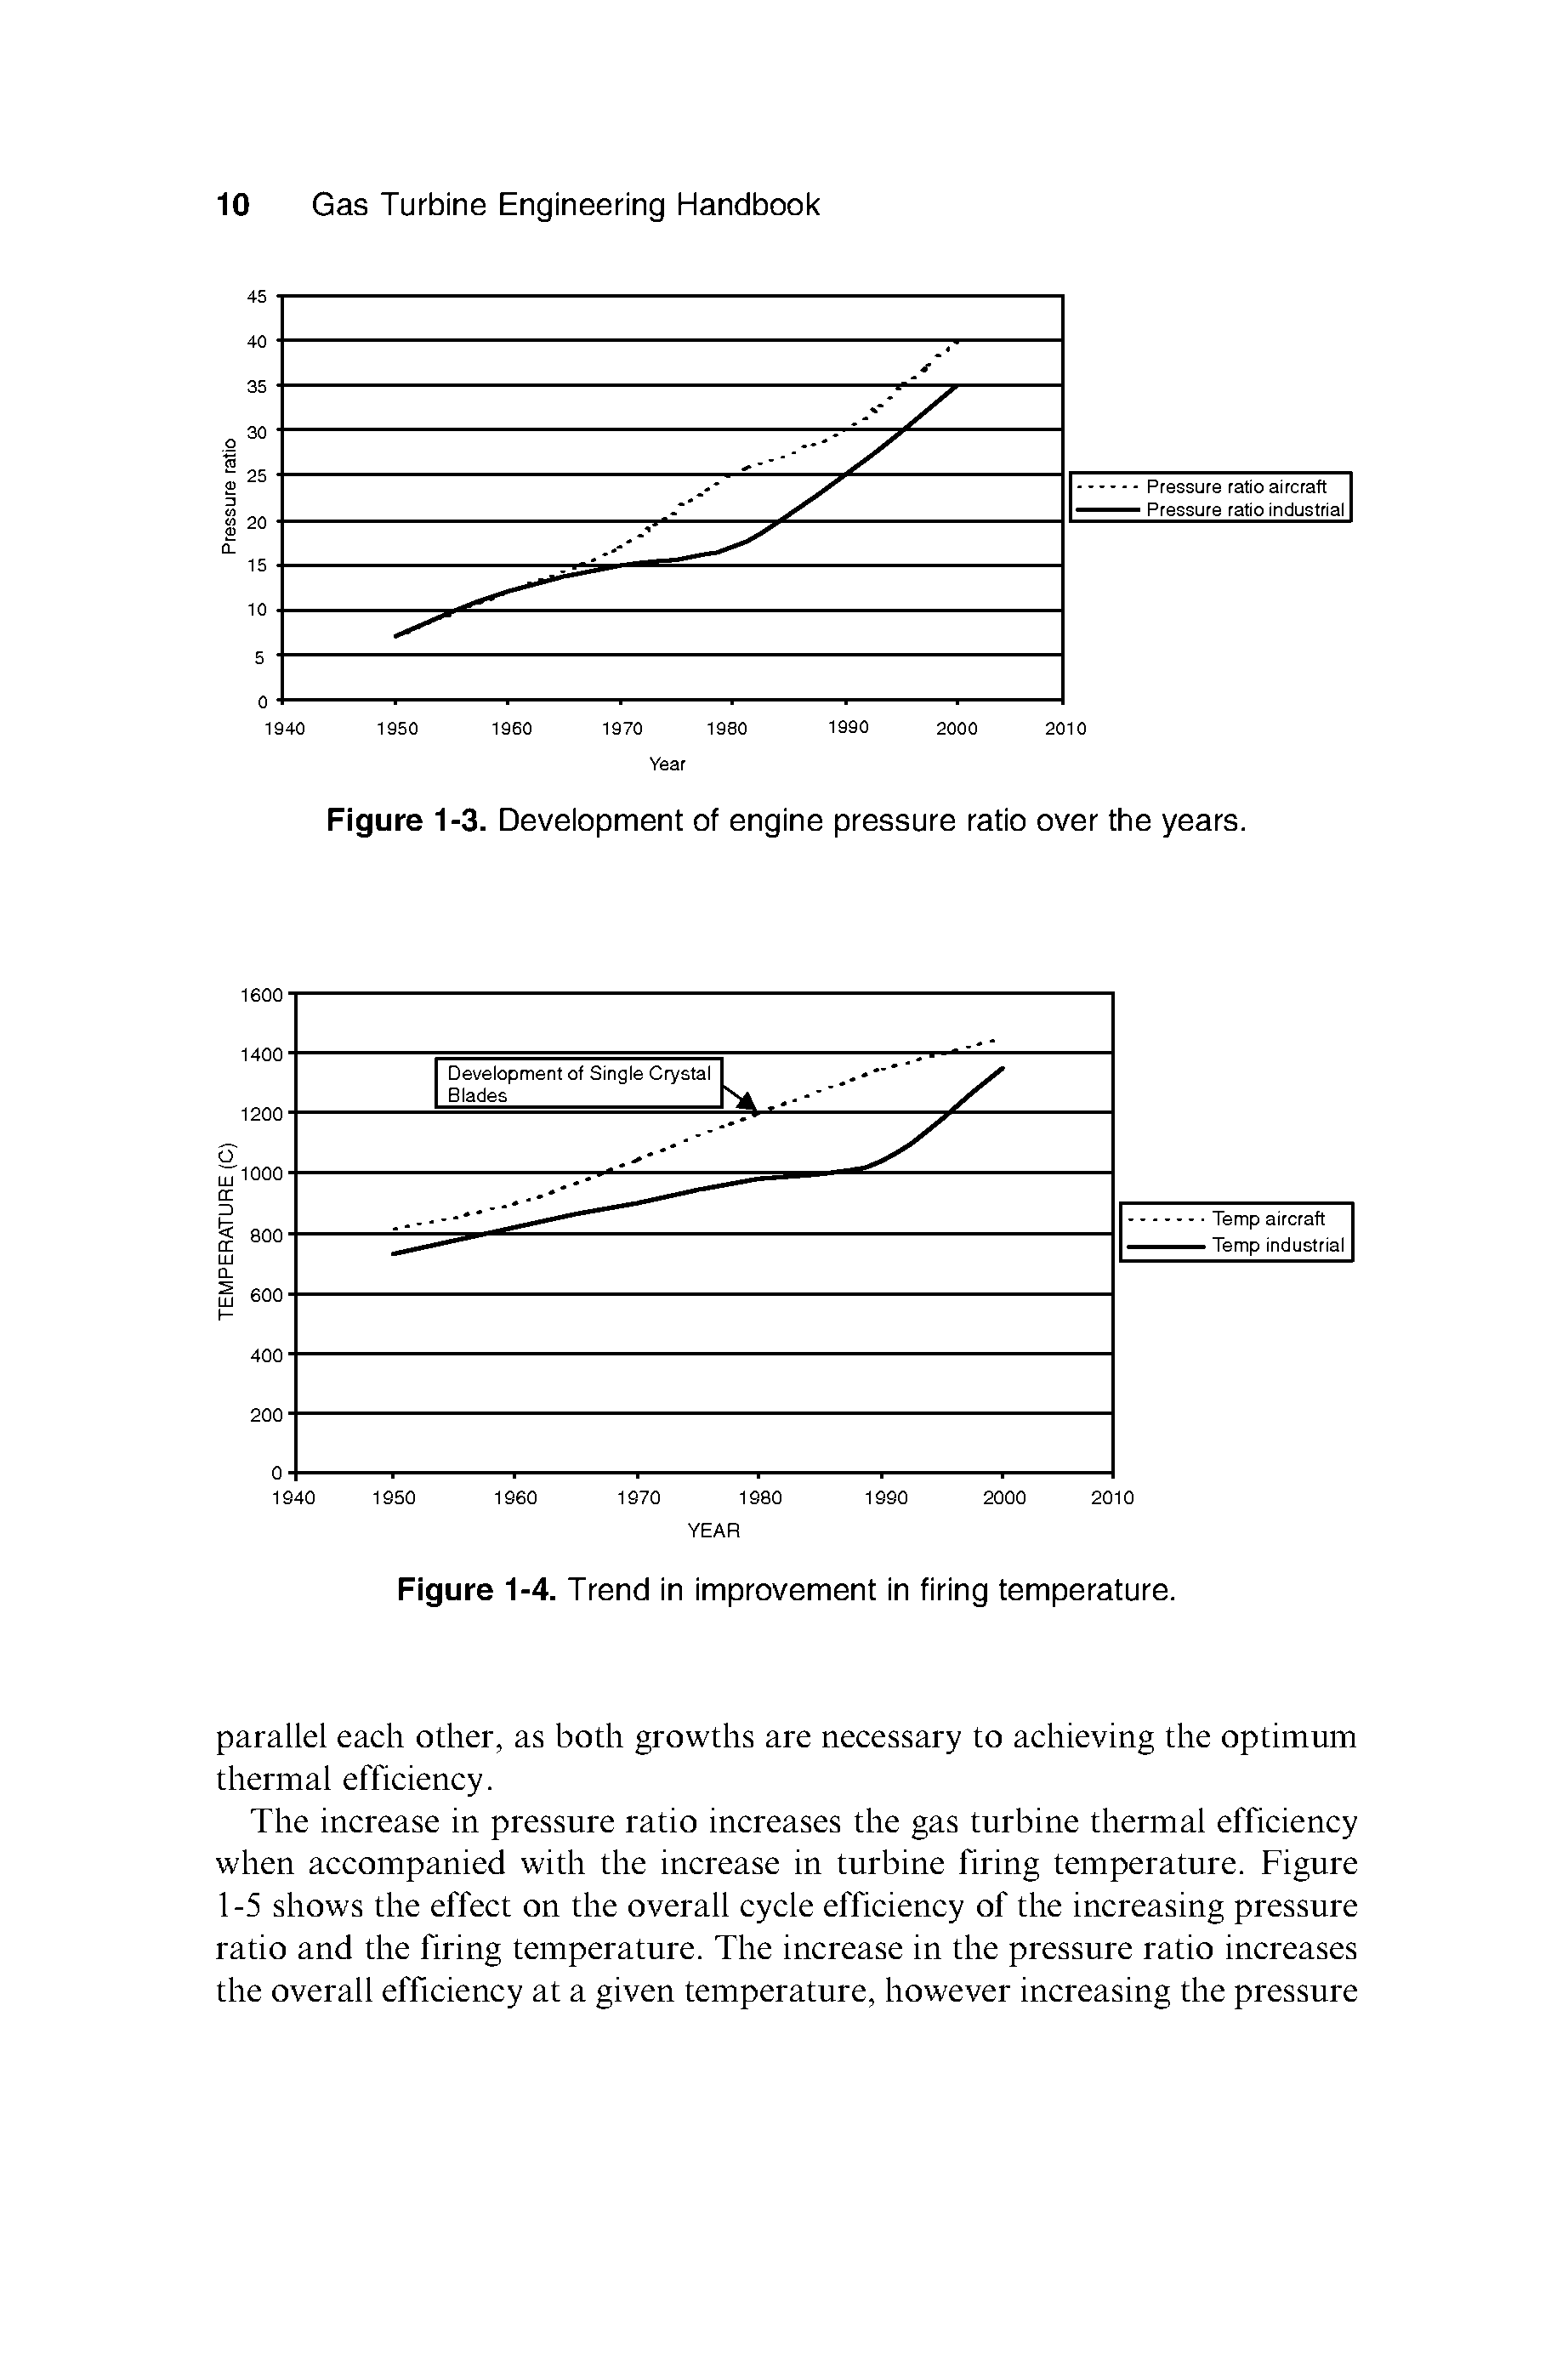 Figure 1-3. Development of engine pressure ratio over the years.